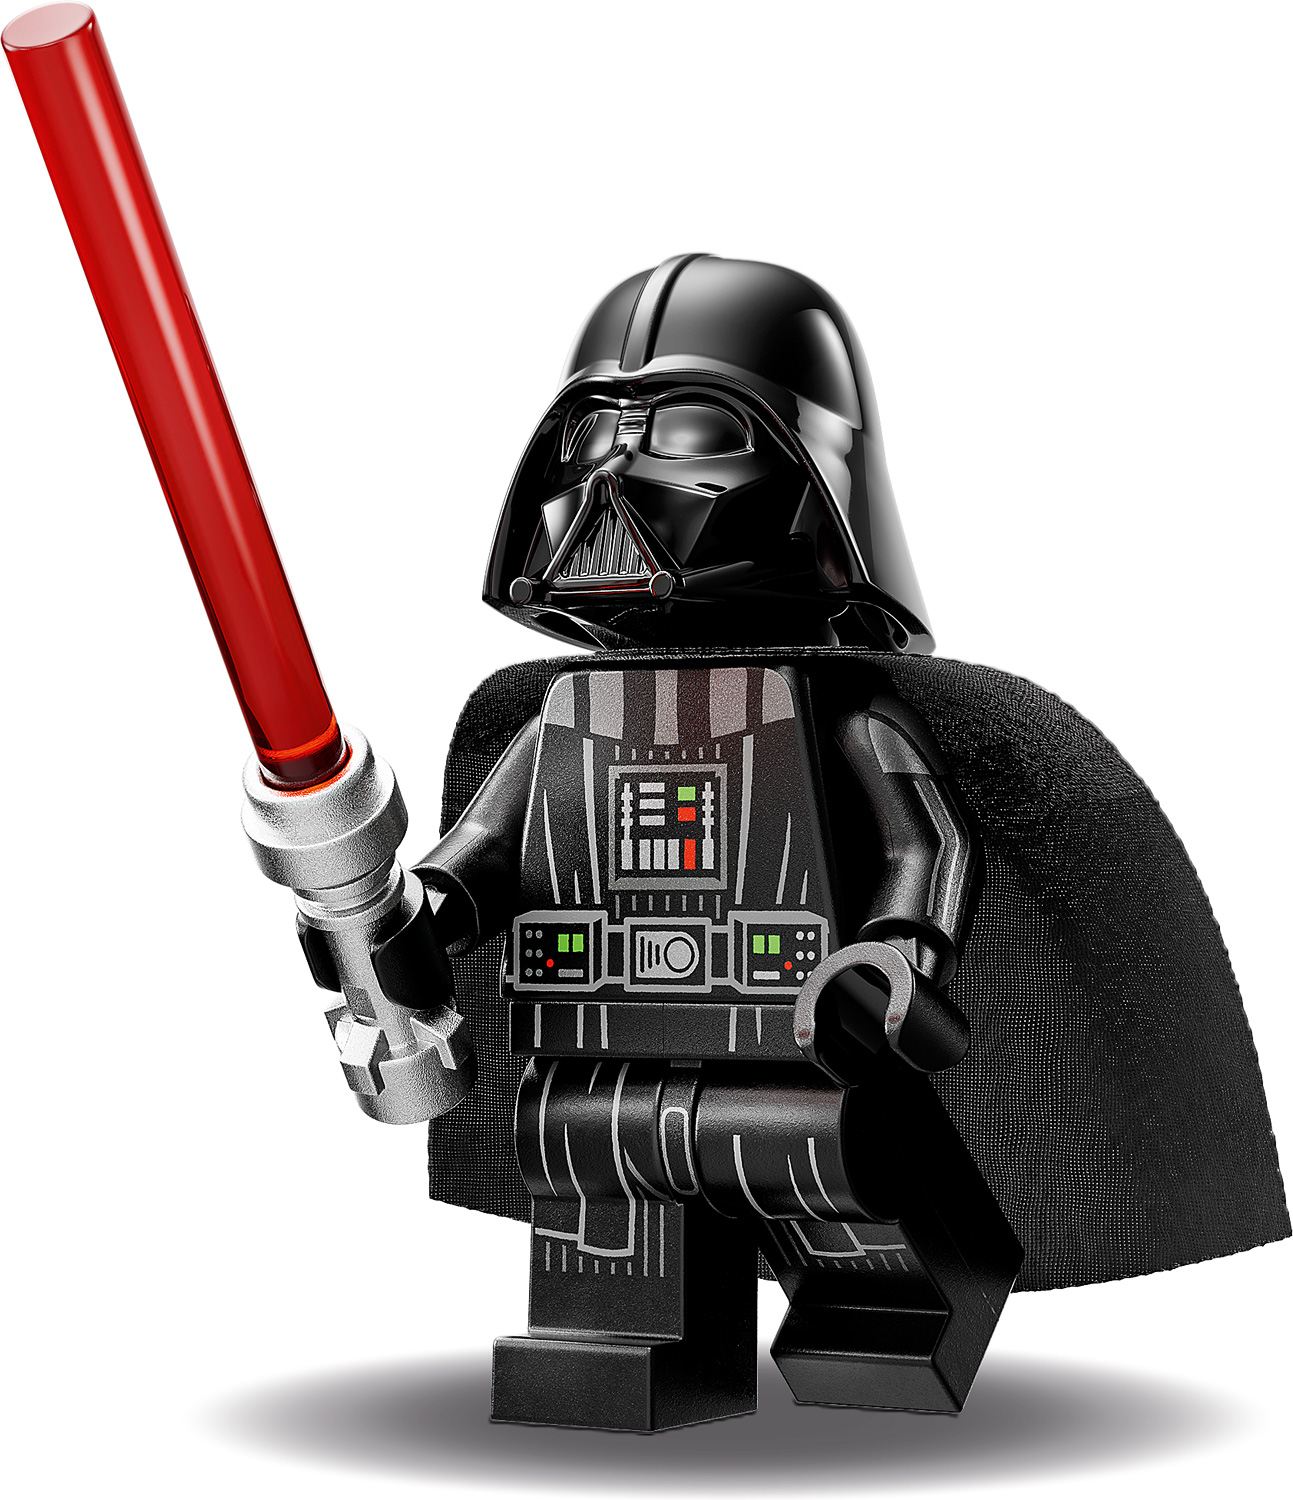 LEGO STAR WARS 75368 Darth Vader Mech